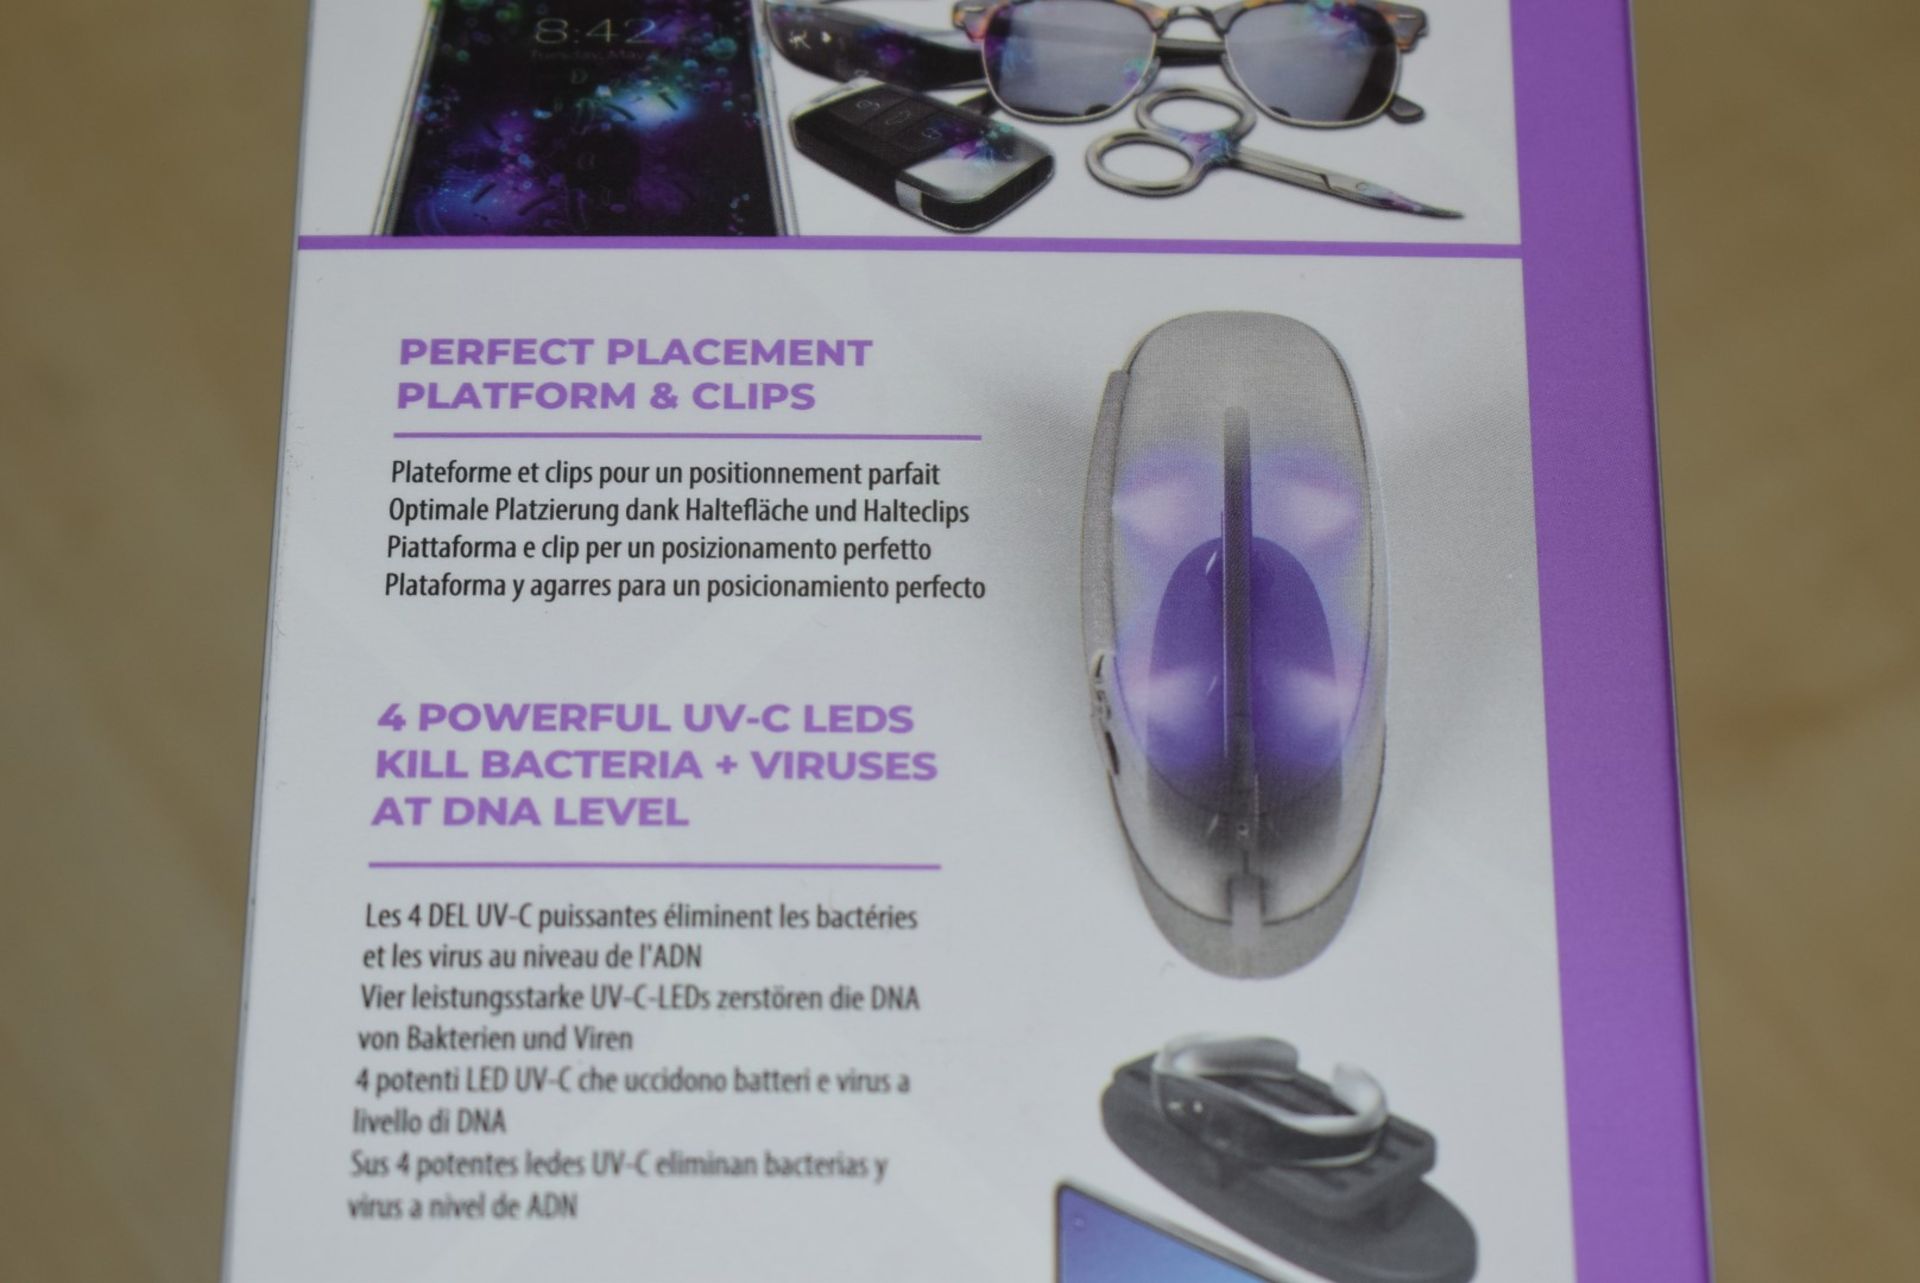 1 x Homedics UV Clean Portable Sanitiser Bag - Kills Upto 99.9% of Bacteria & Viruses in Just 60 - Image 18 of 18